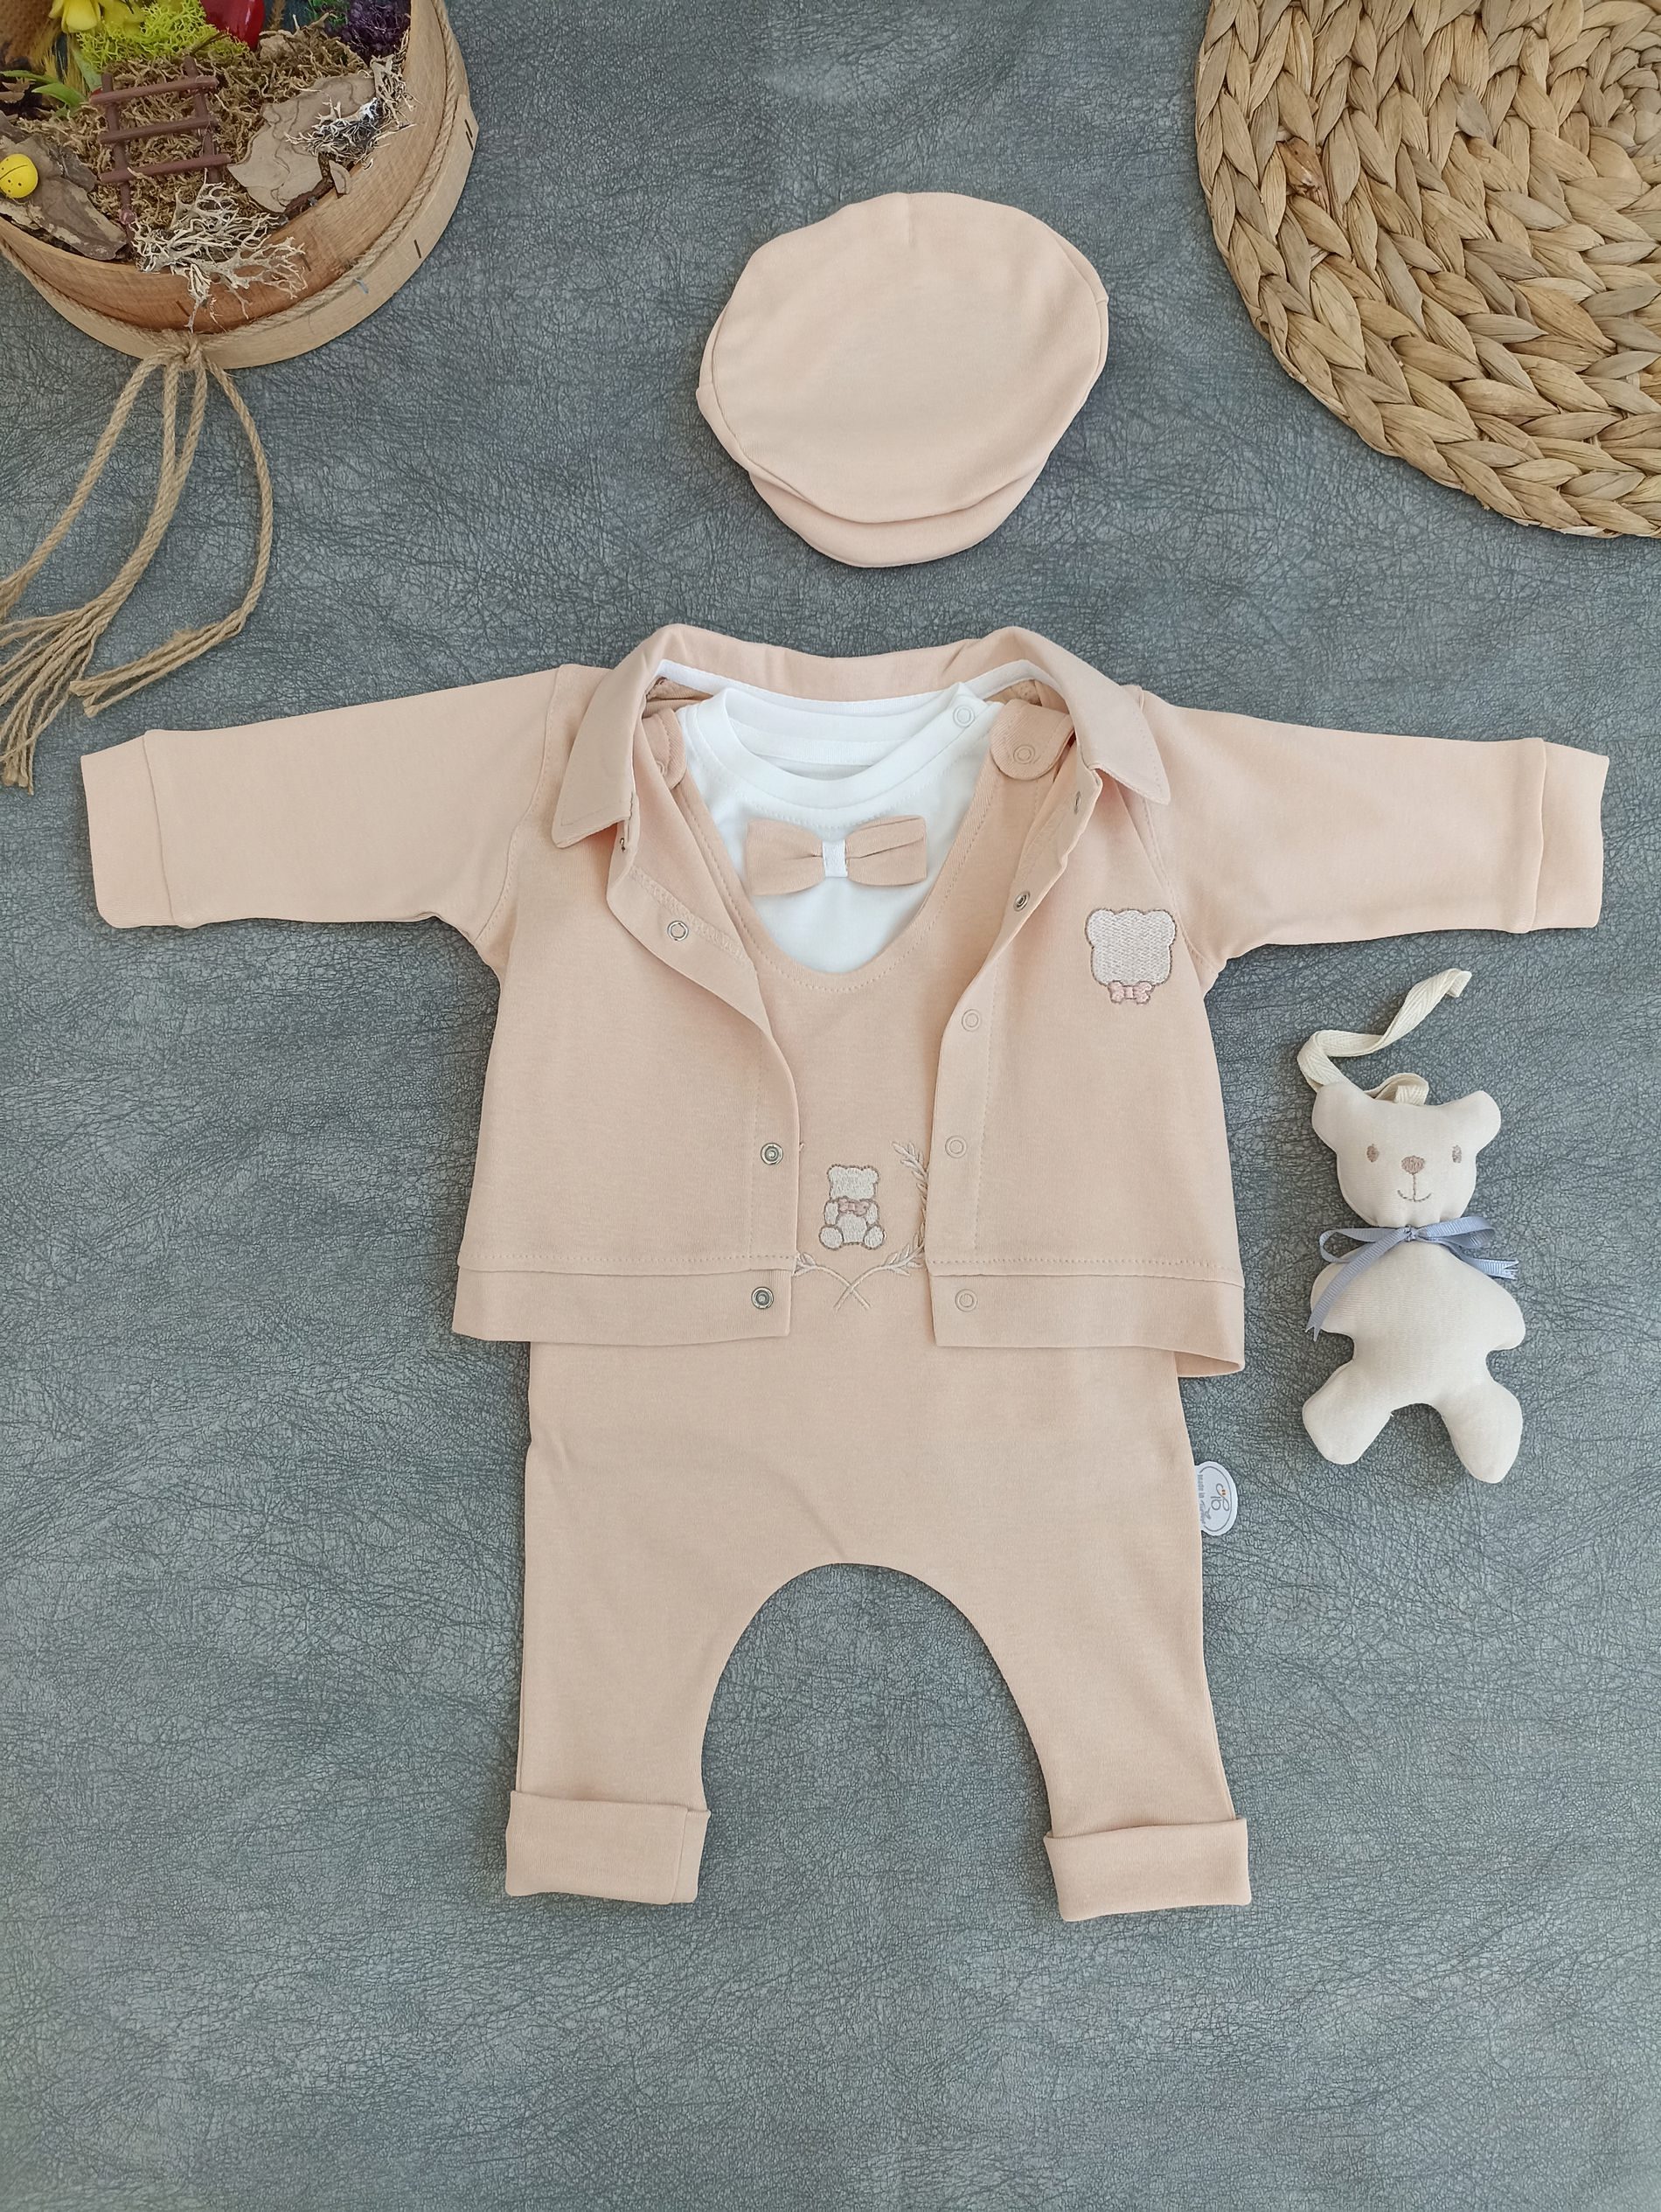 Baby Boy 5 Pieces Set (Jumpsuit - Shirt - Hat - Body - Toy) / 3M | 6M | 9M - Kids Fashion Turkey